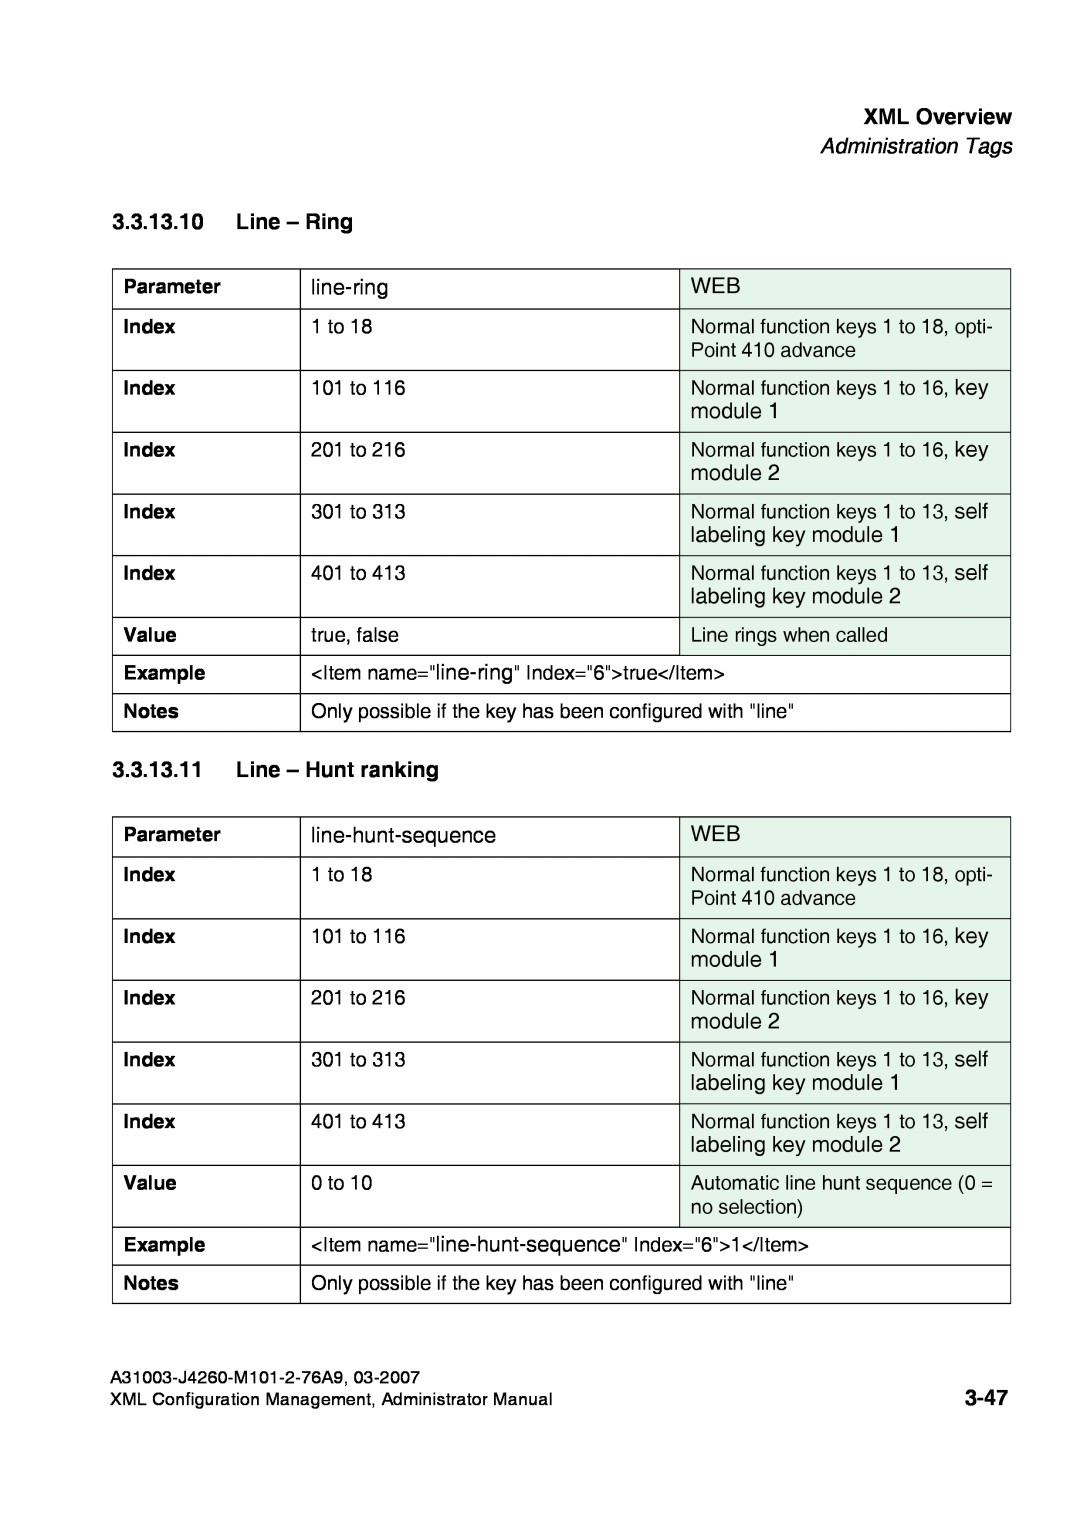 Siemens 410 S V6.0, 420 S V6.0 manual Line - Ring, Line - Hunt ranking, 3-47, XML Overview, Administration Tags 